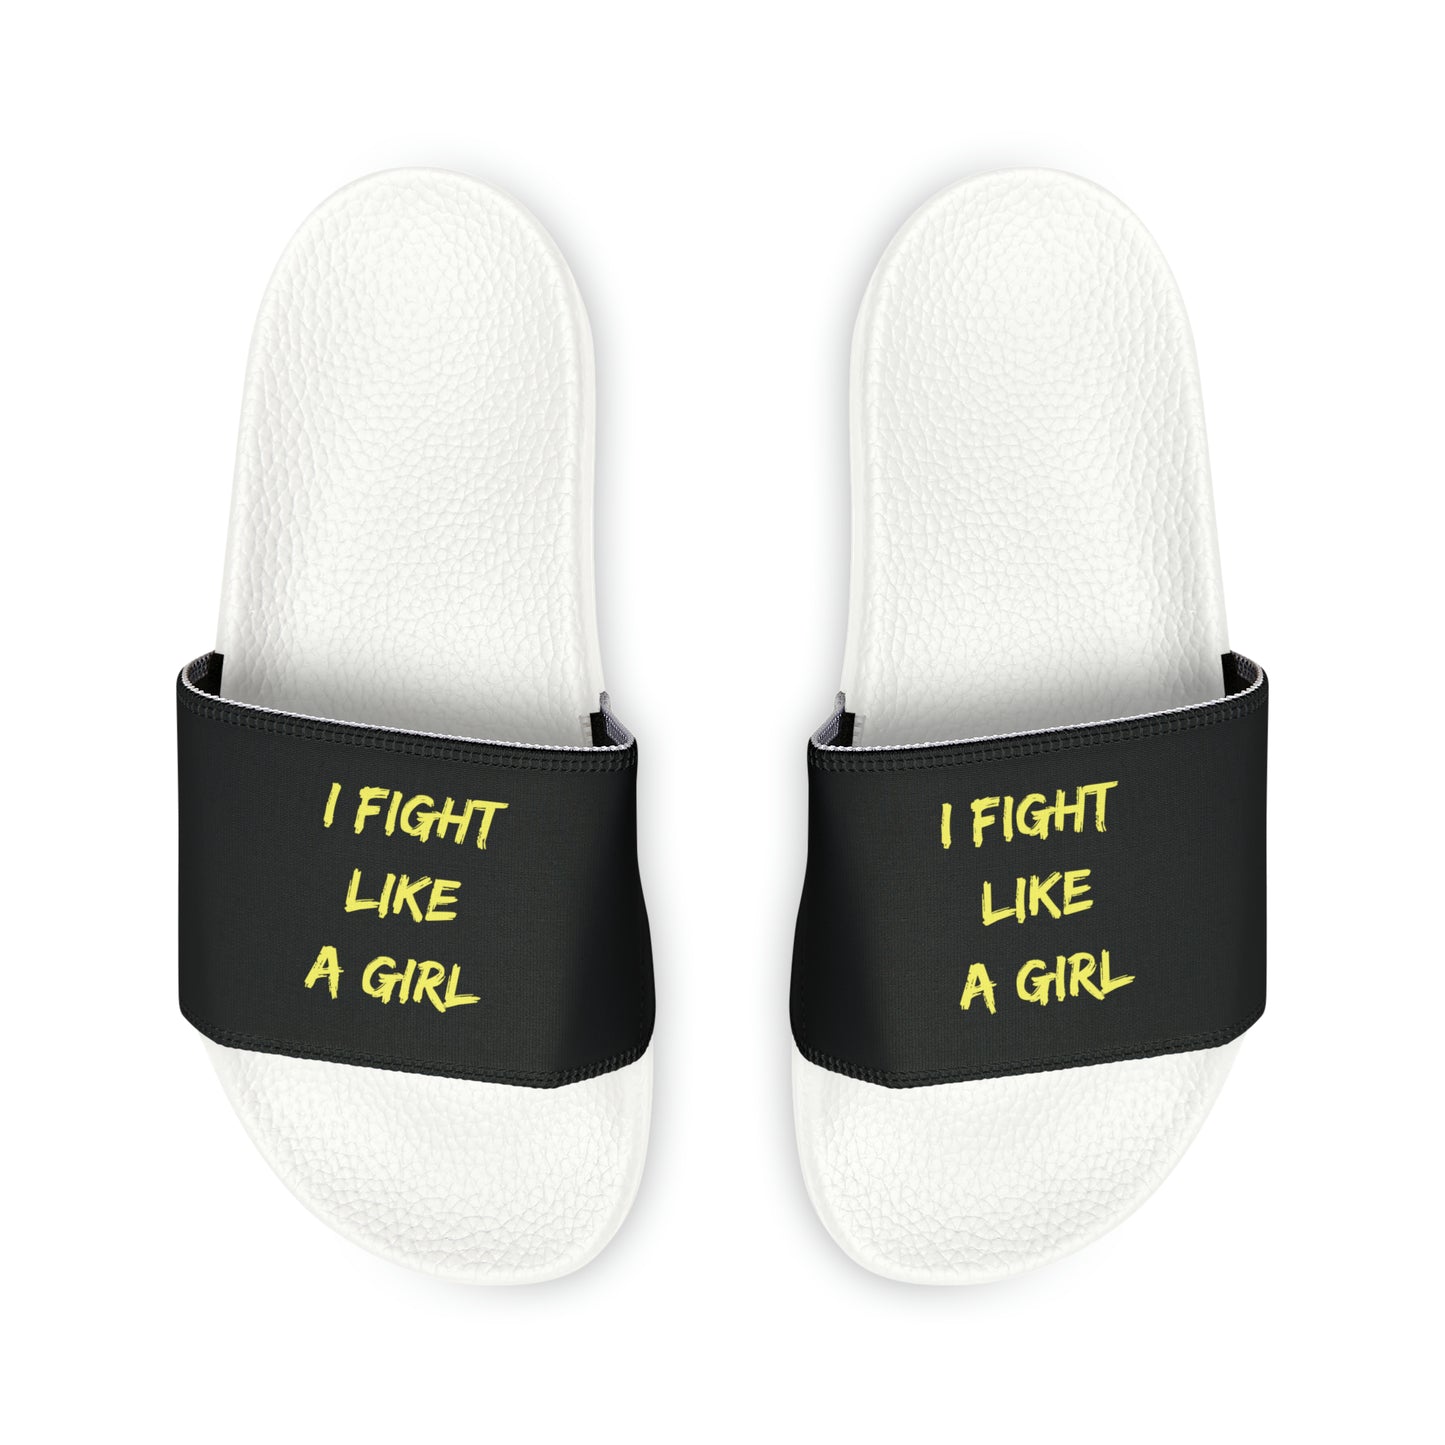 I Fight Like a Girl Slide Sandals - Black